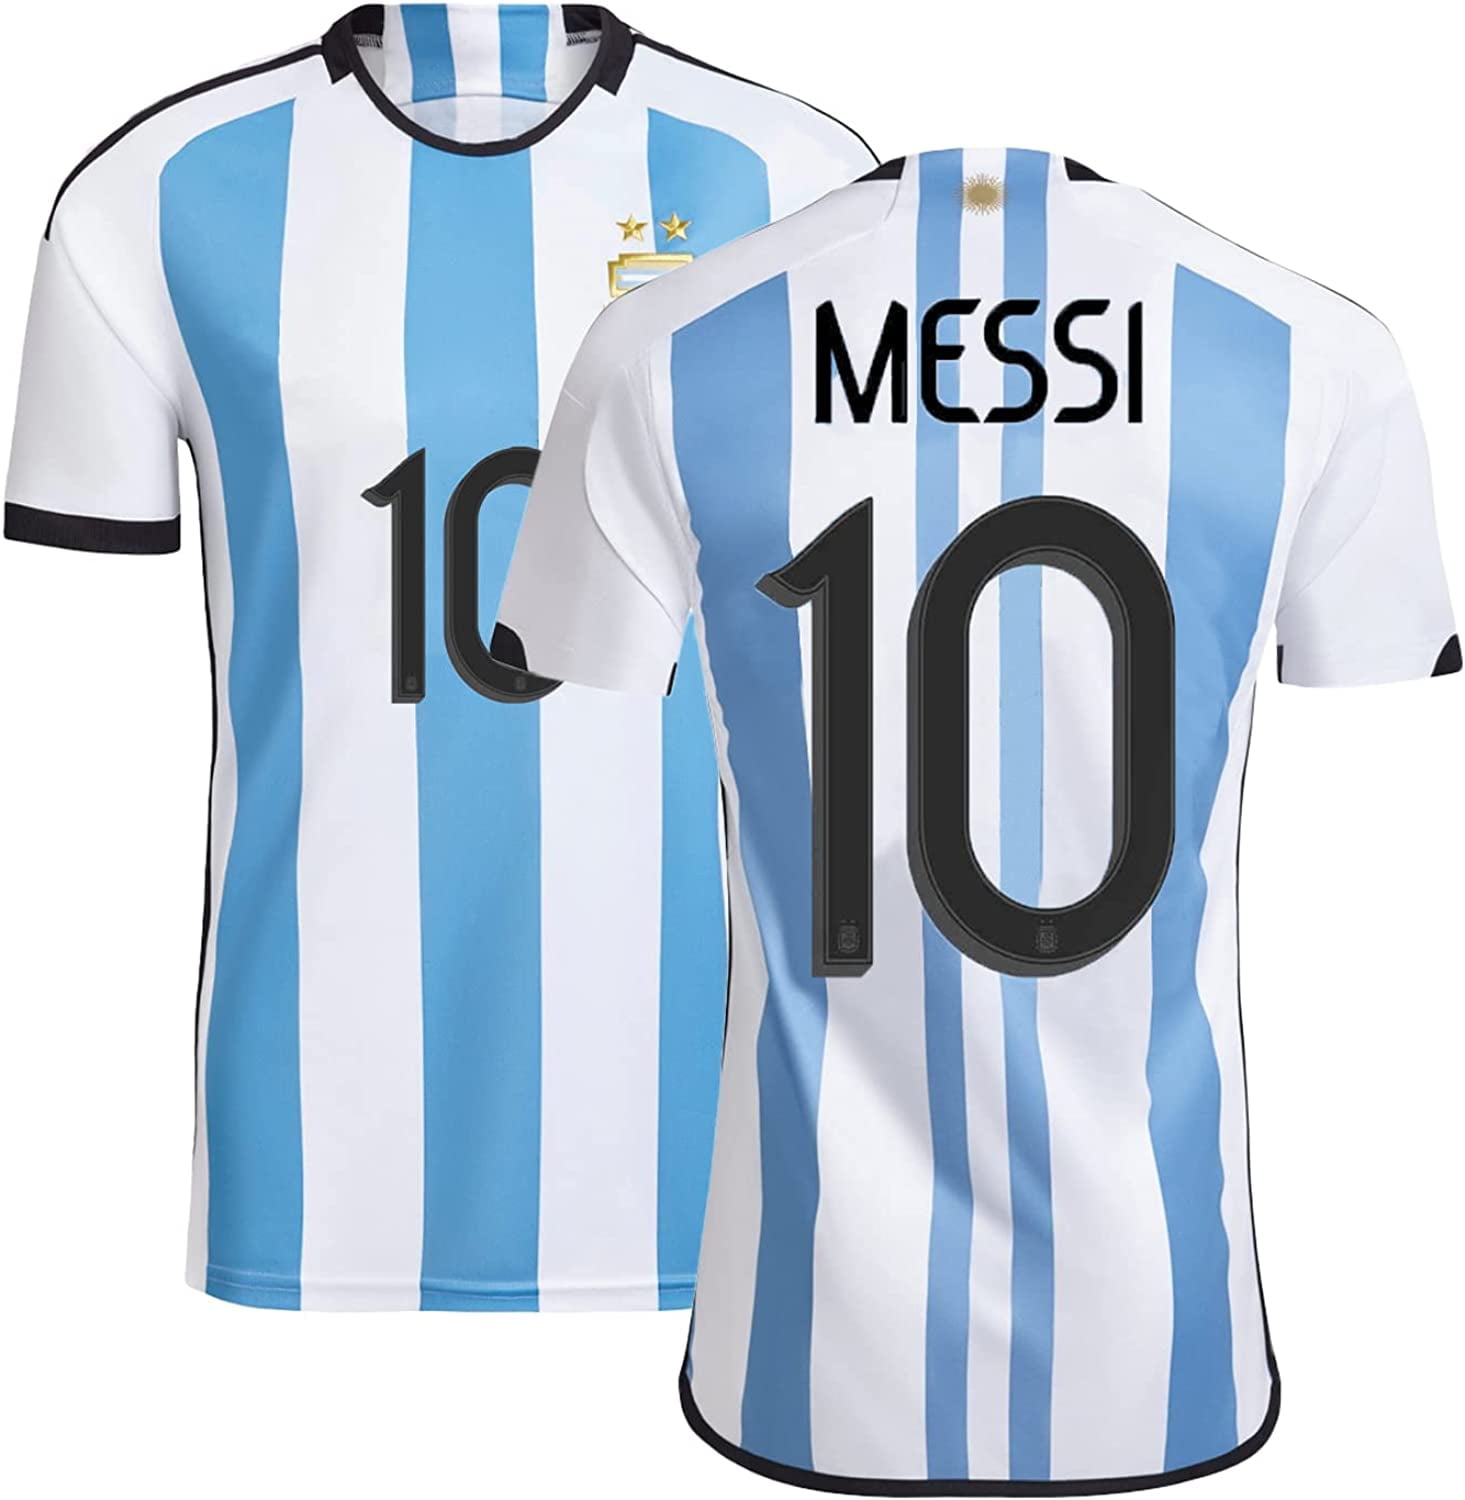 2022 Argentina Soccer Team Jersey #10 for Men Adult Sizes -